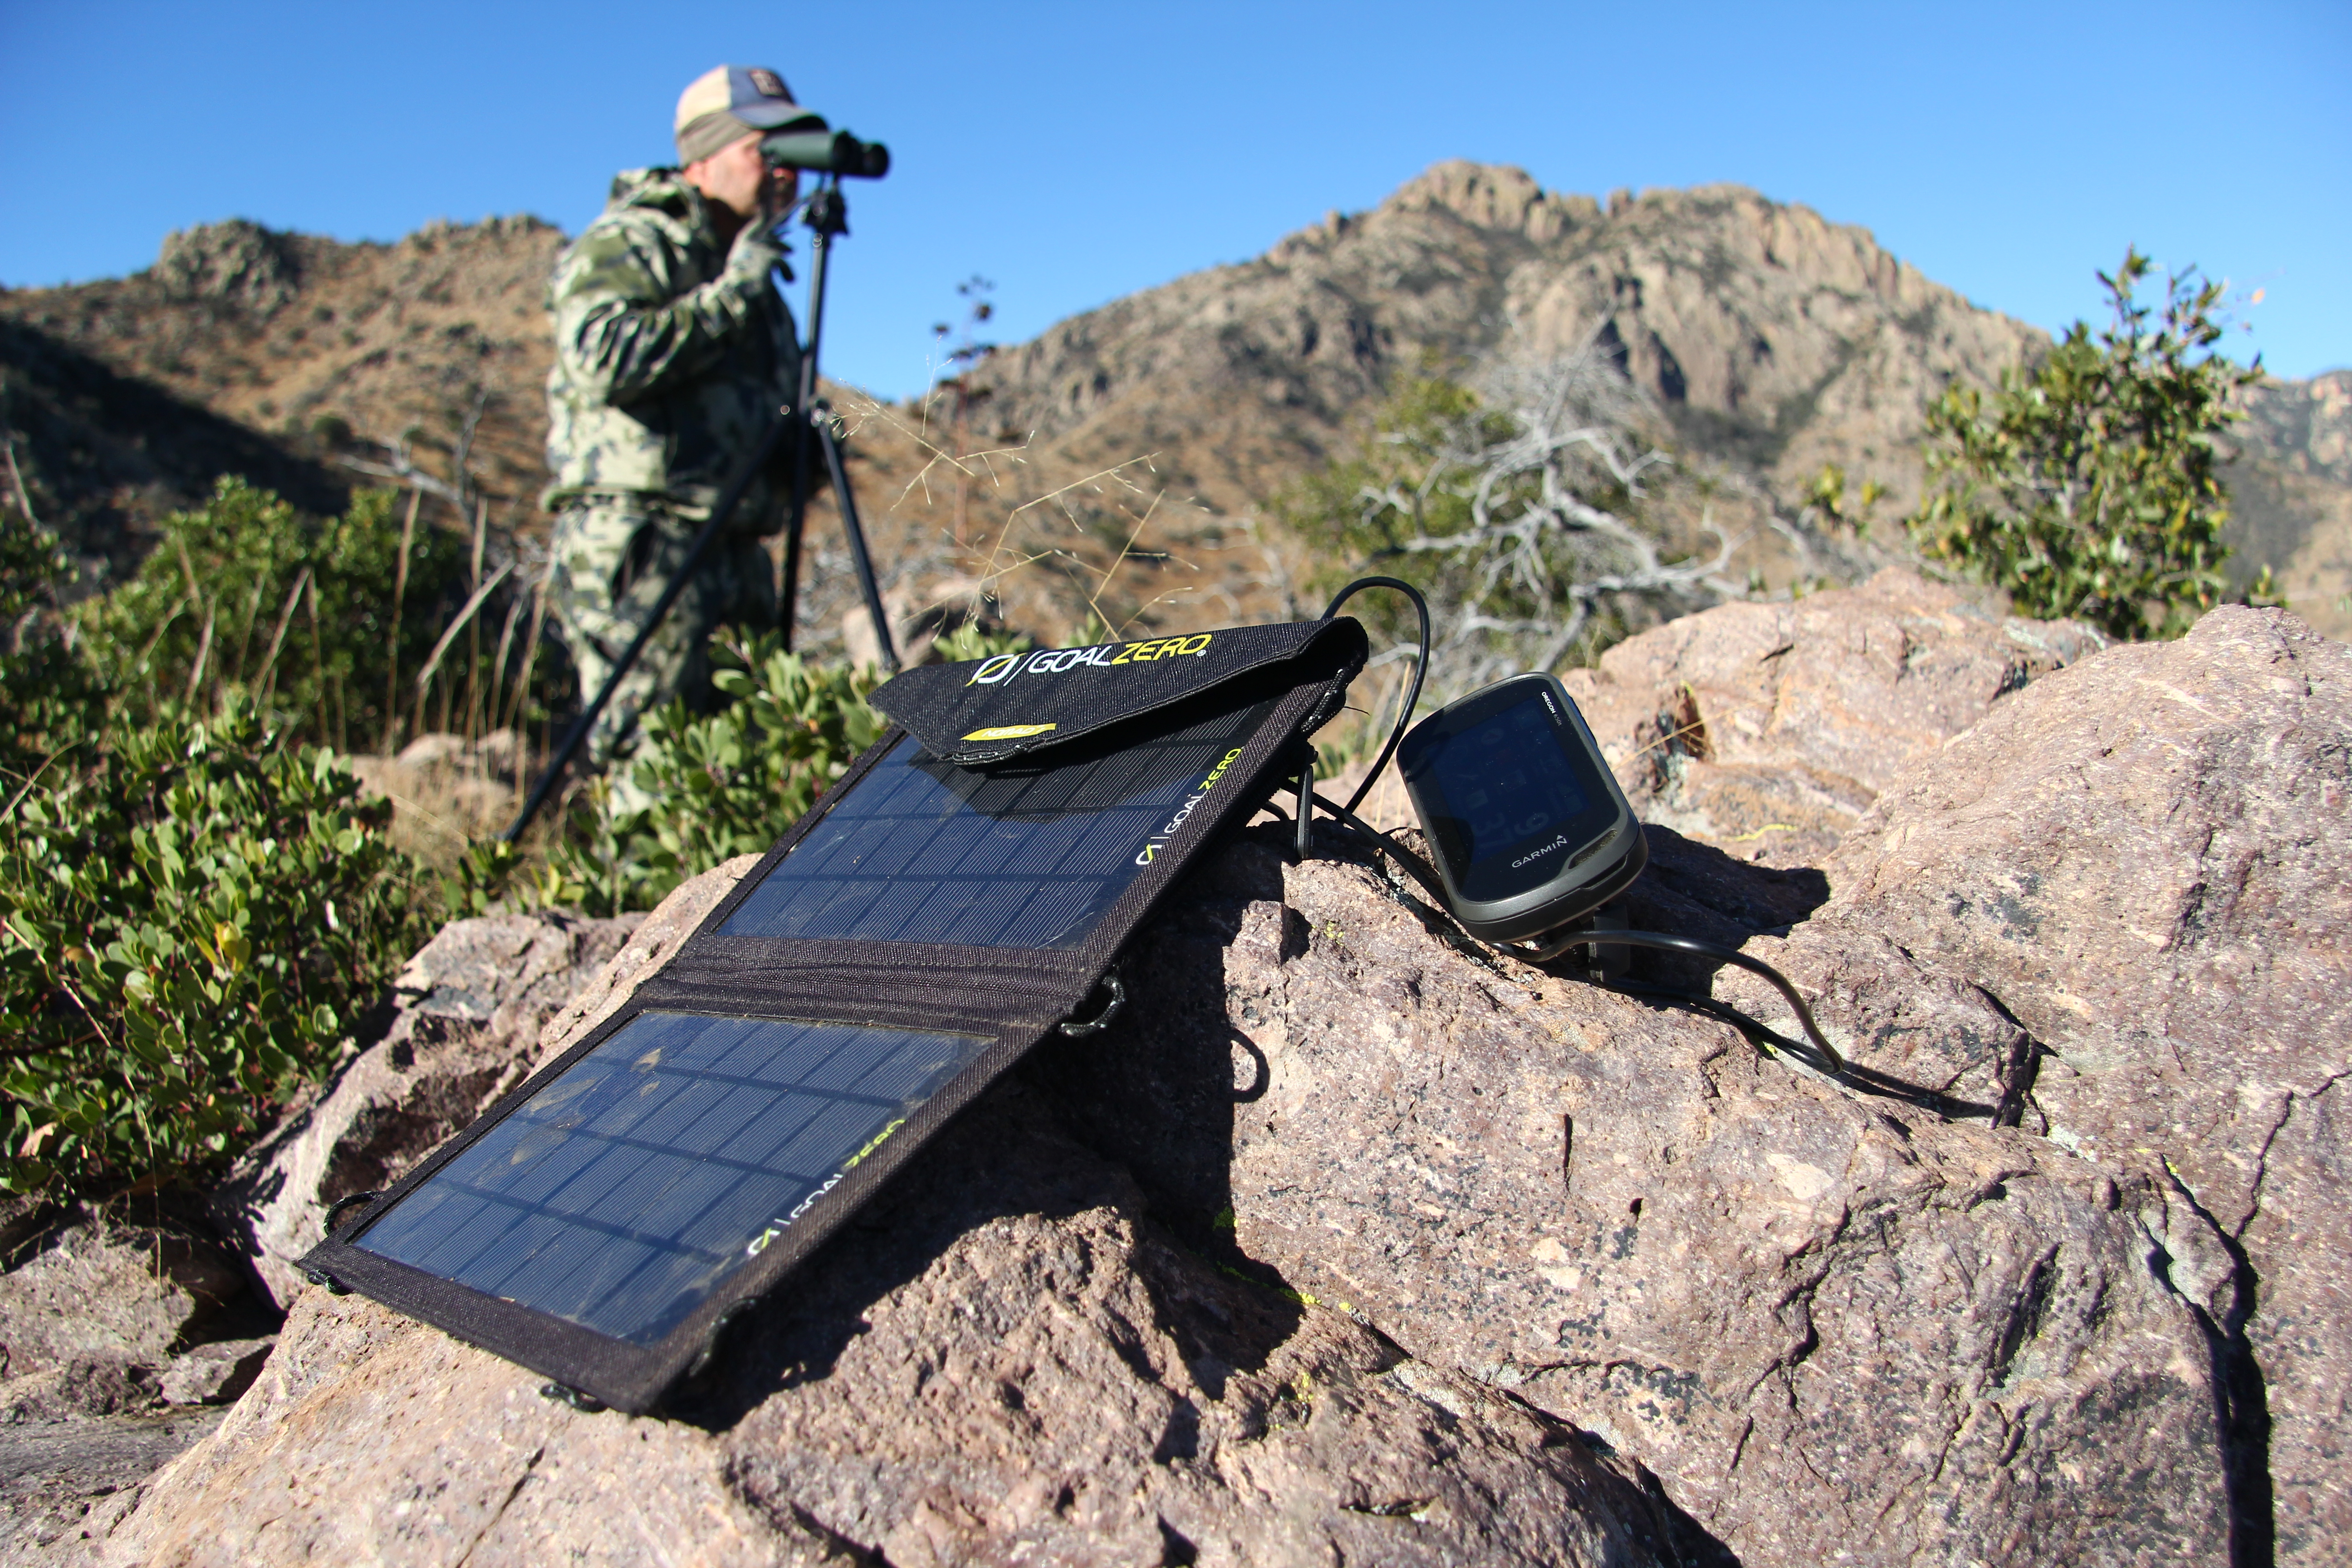 a Goal Zero solar portable power source charging a phone